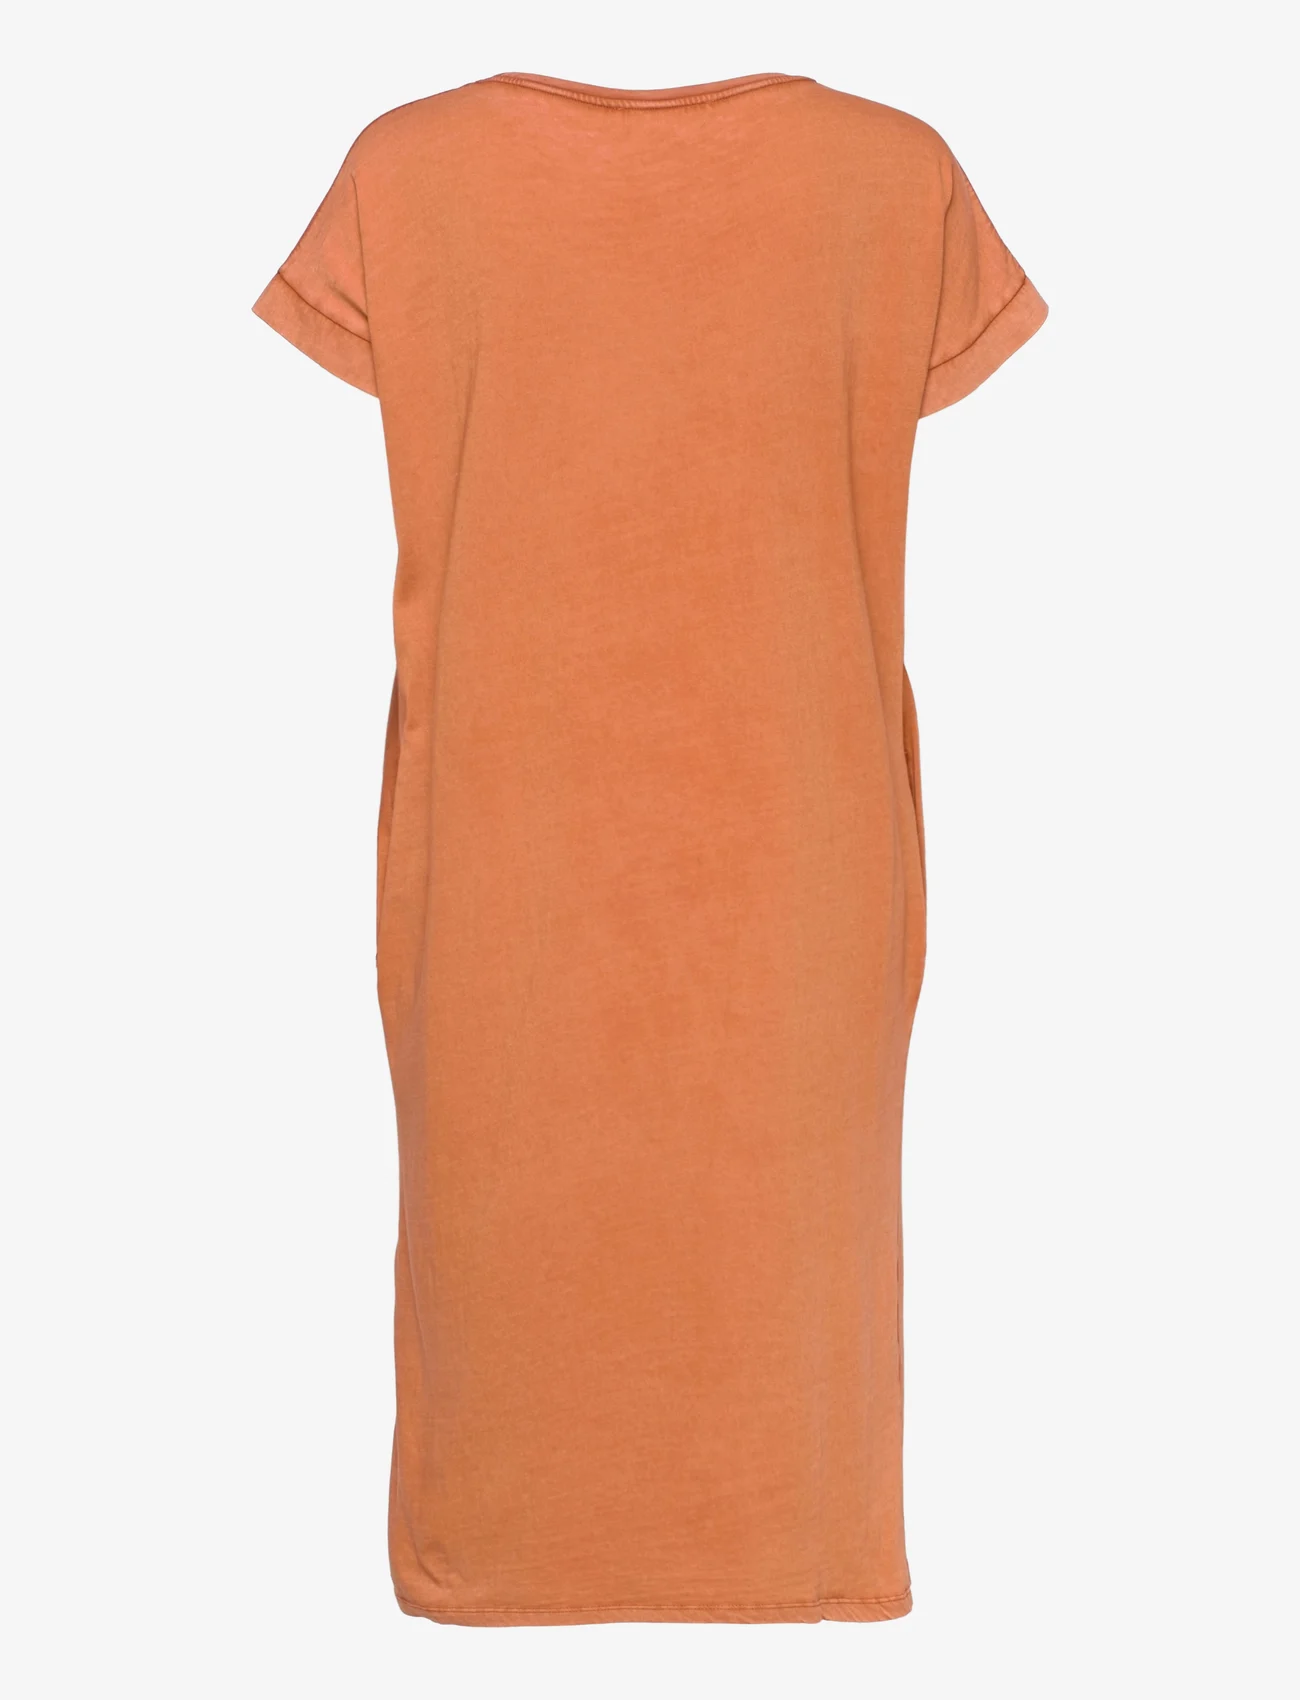 Lounge Nine - LNHanky Dress - t-shirt dresses - pecan brown - 1